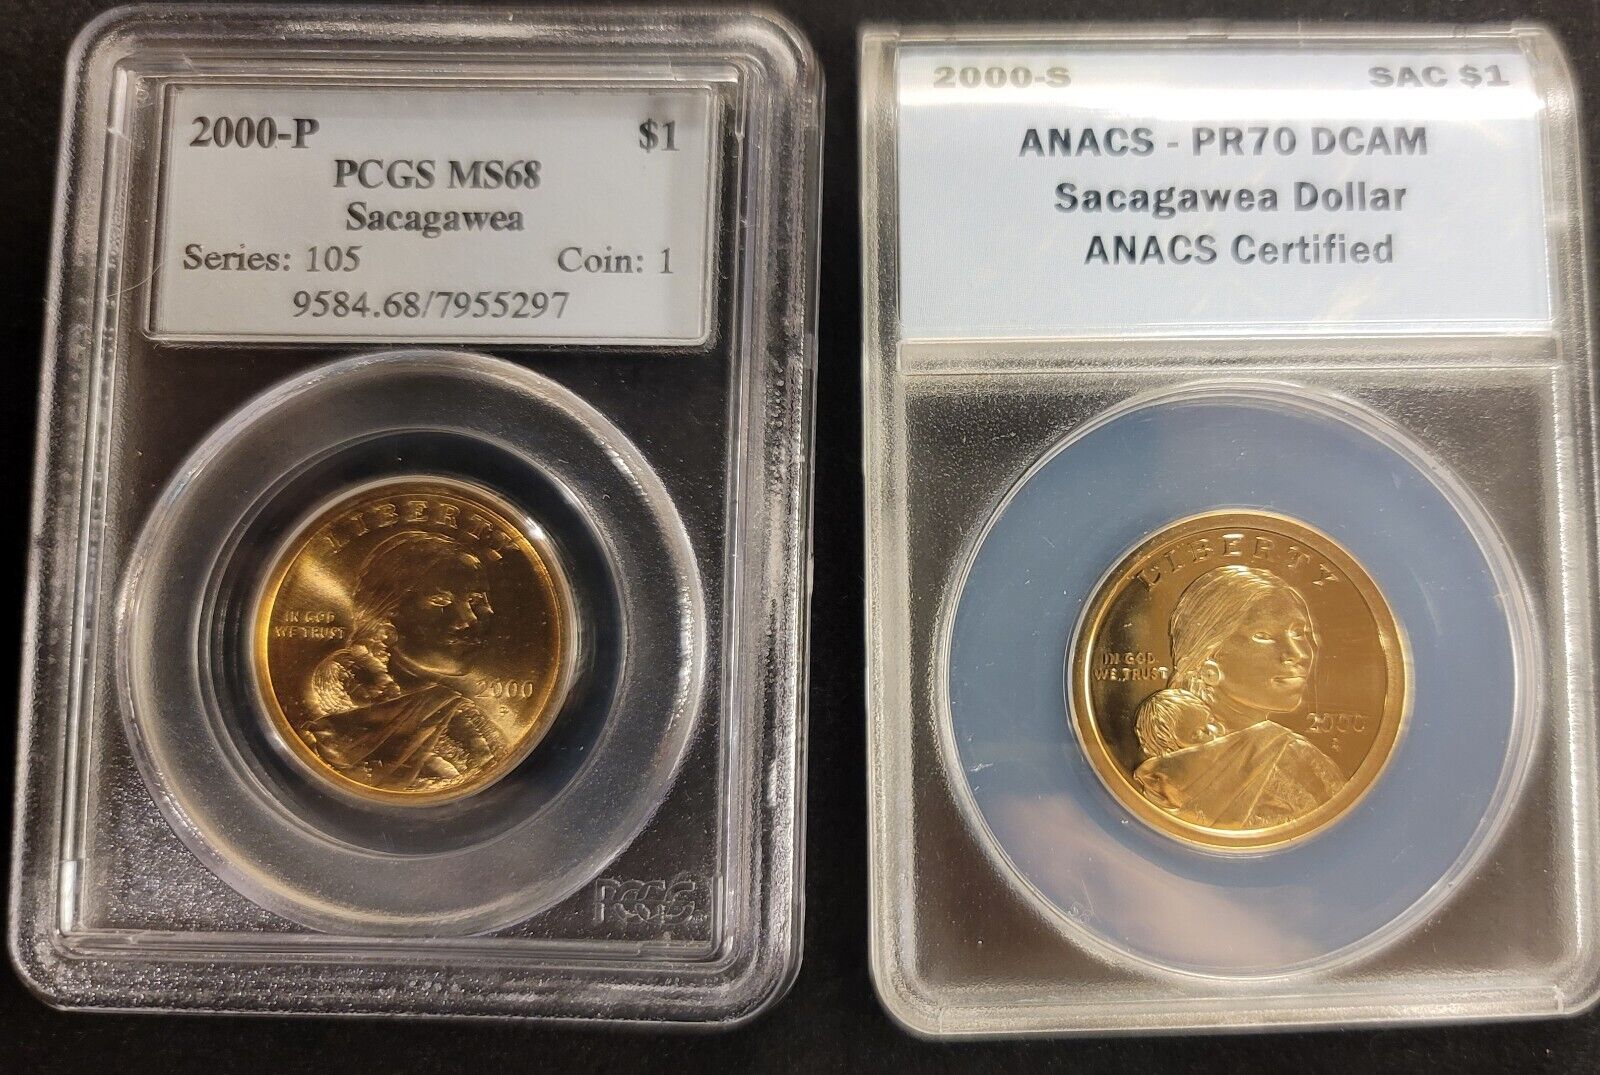 Sacagawea Cert. Dollar Set: One Pcgs 2000-p Ms68 & One Anacs 2000-s Pr70 Dcam